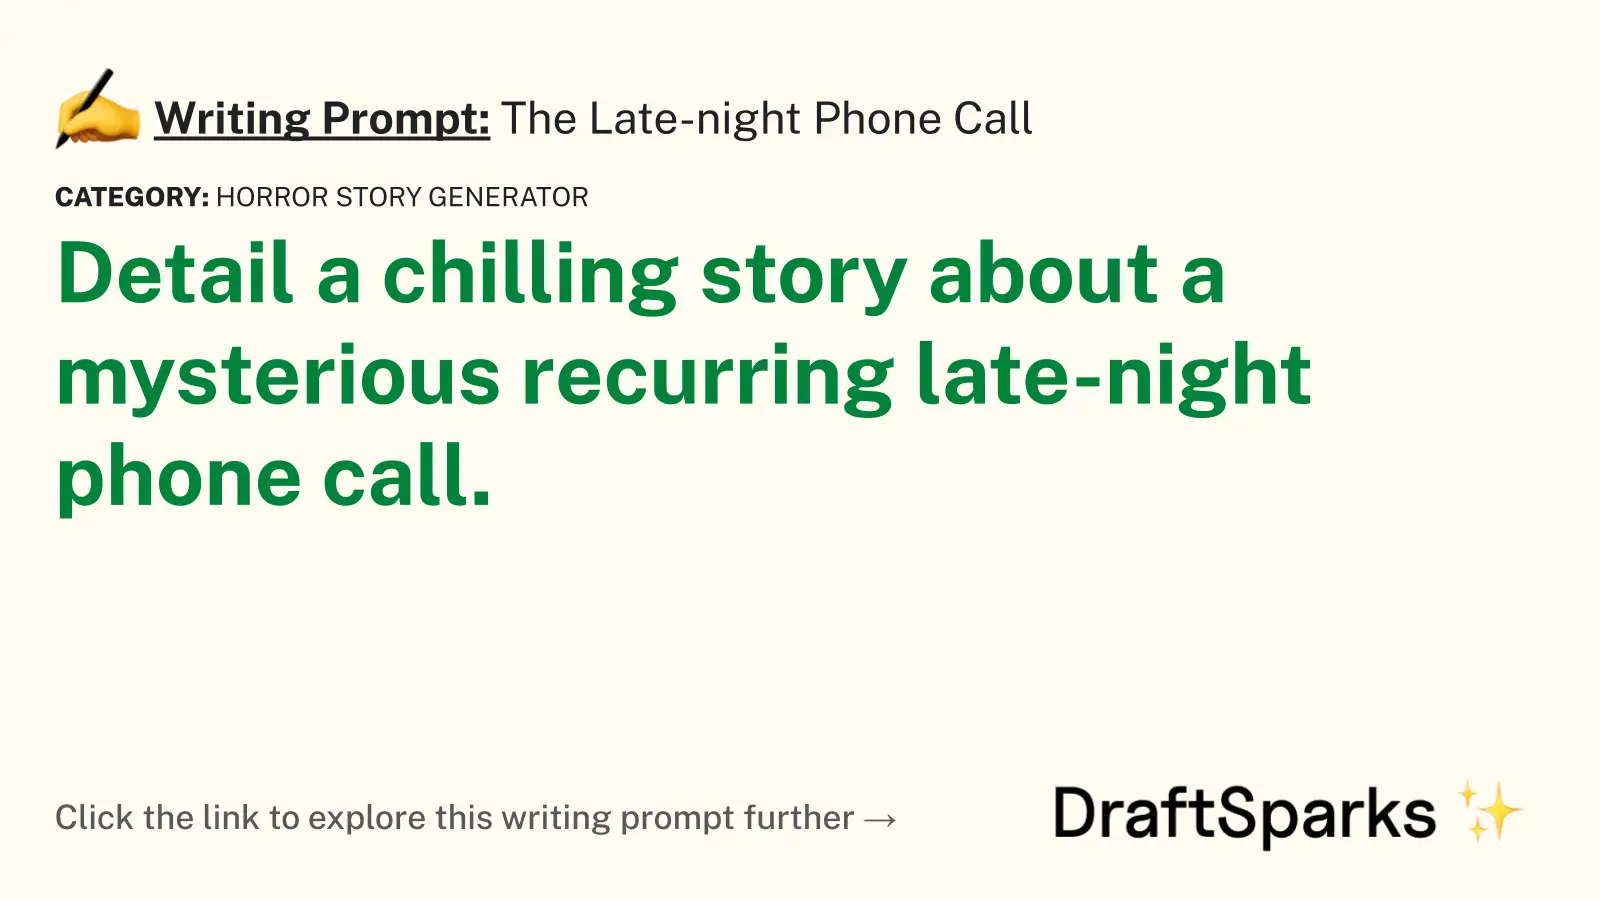 The Late-night Phone Call